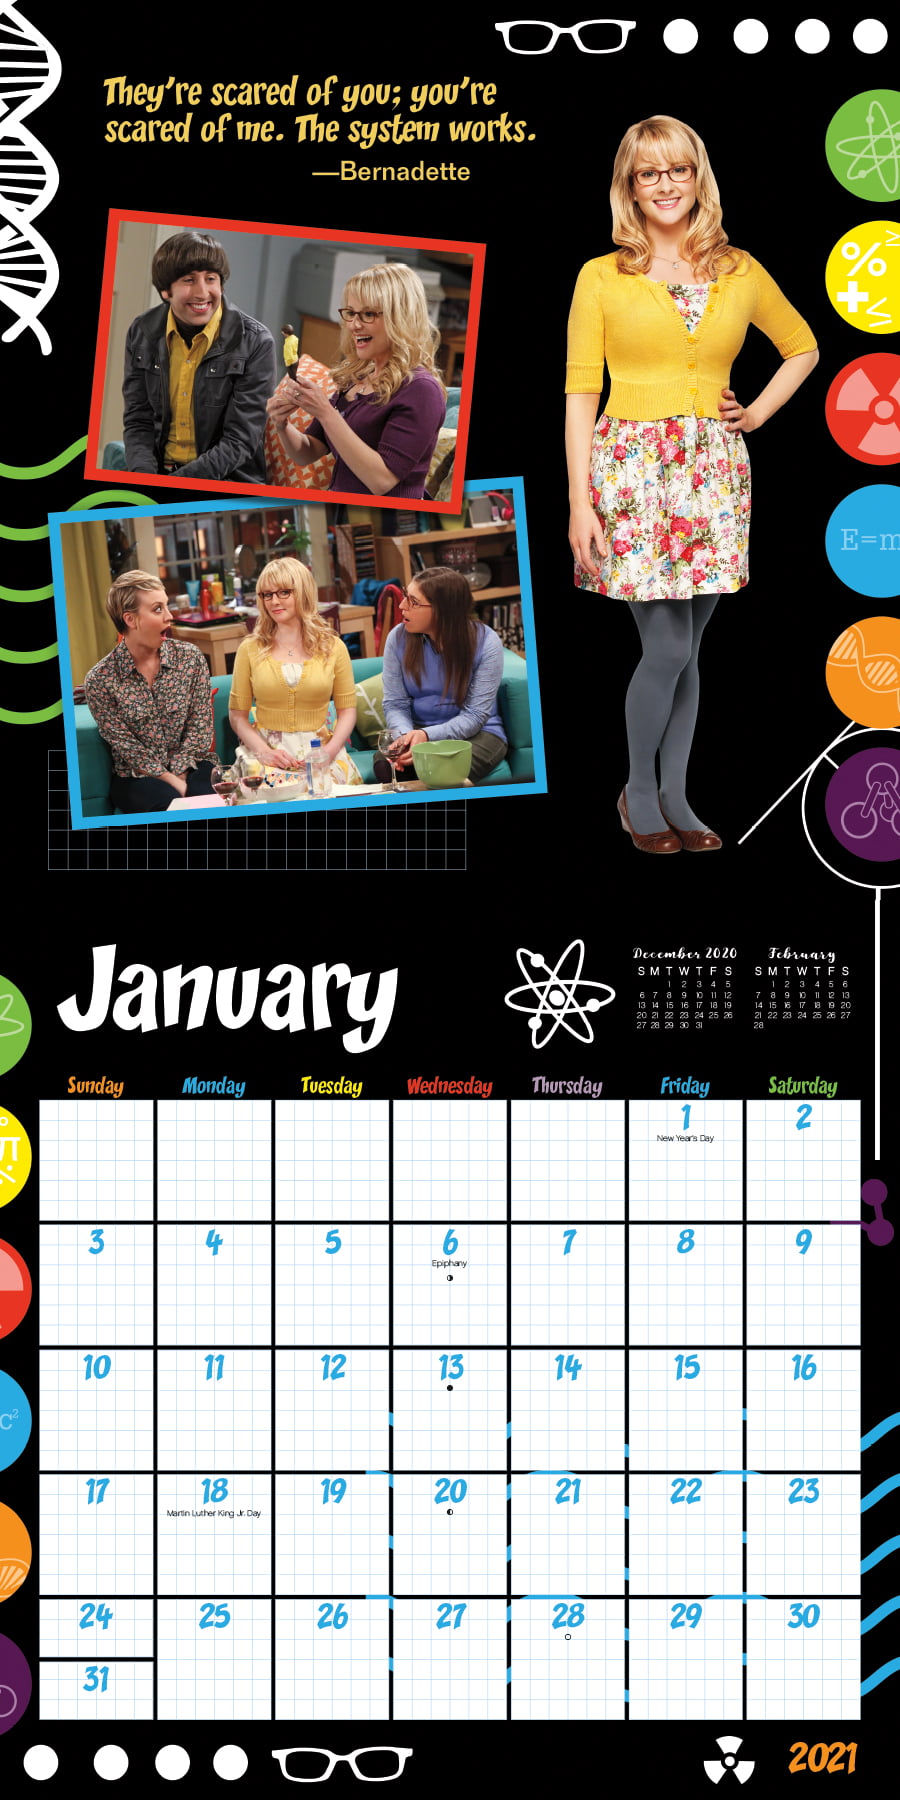 DateWorks The Big Bang Theory 2021 Wall Calendar 12" x 12"